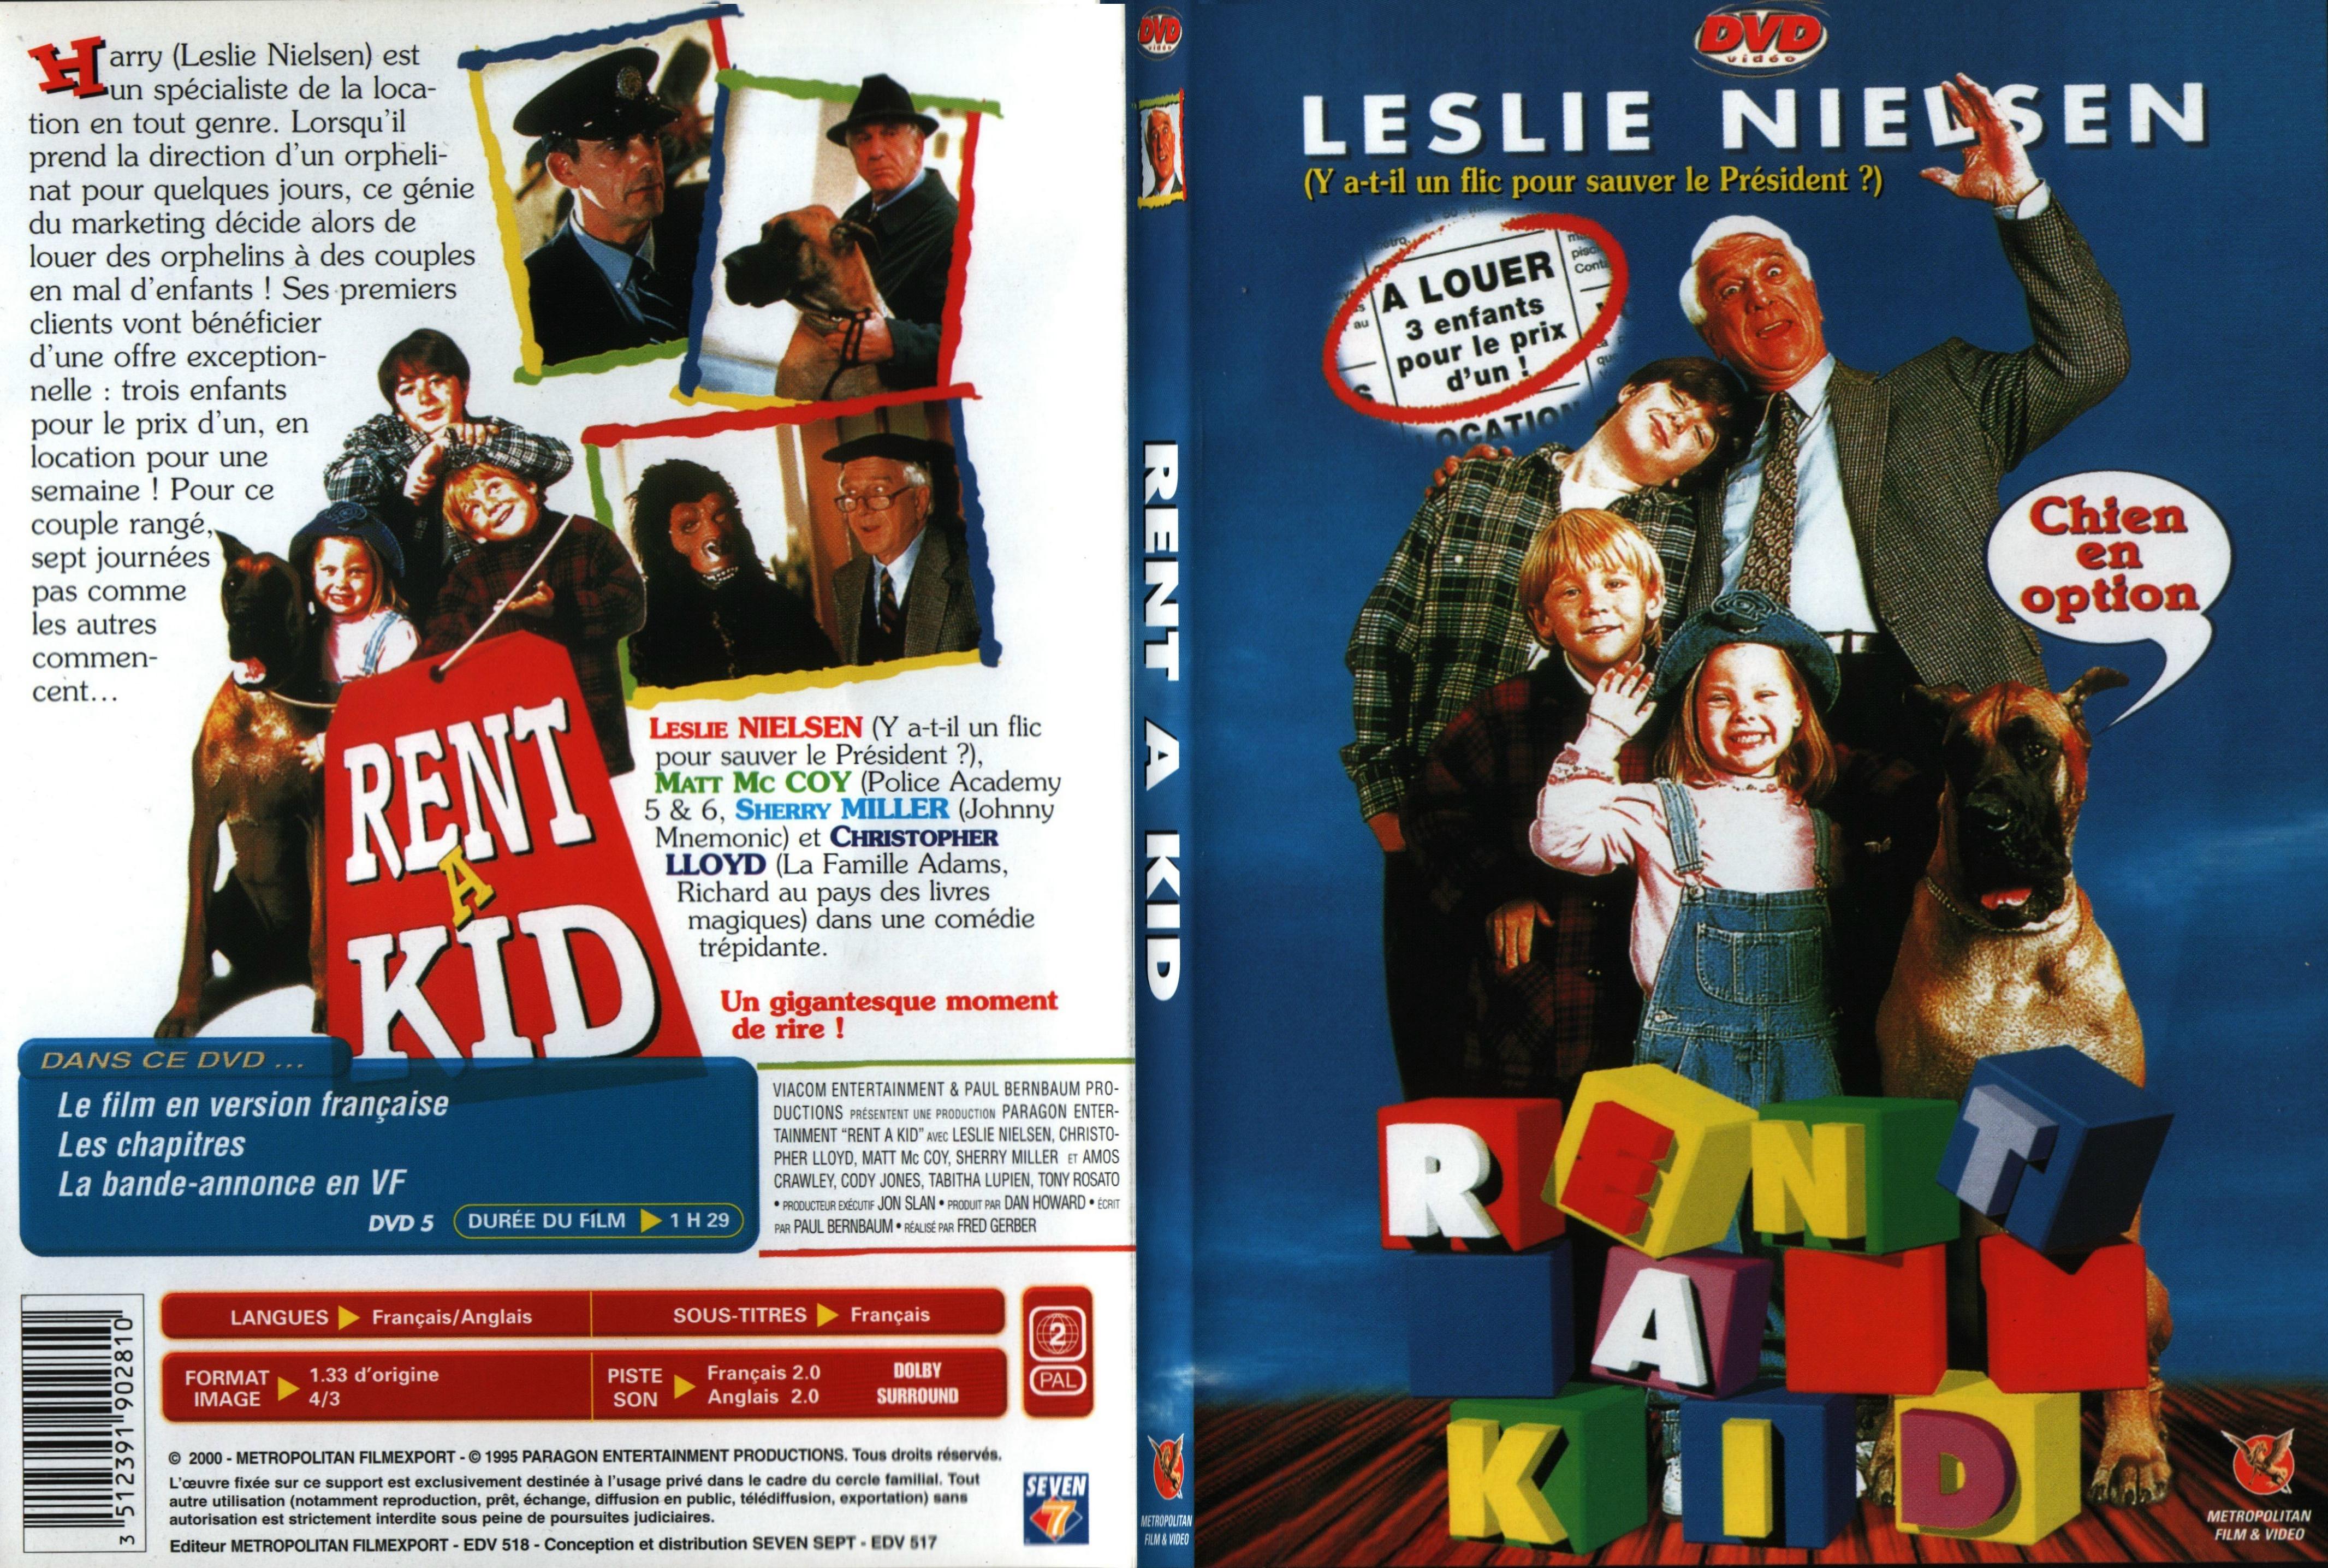 Jaquette DVD Rent a kid - SLIM